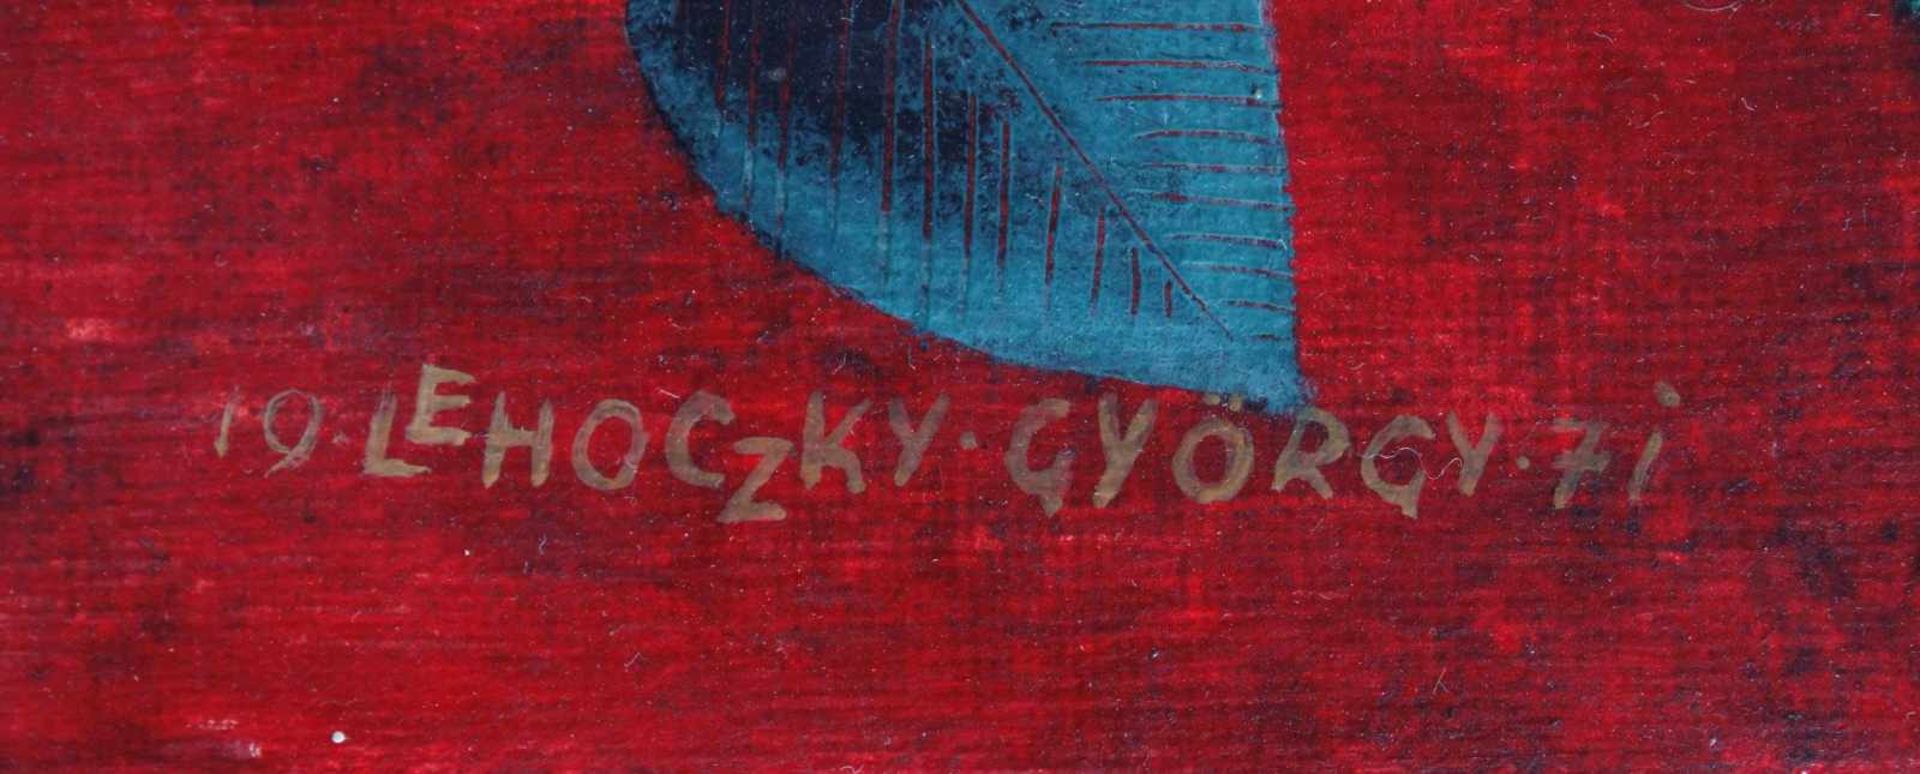 György LEHOCZKY (1901-1979), Abony< - Image 3 of 4